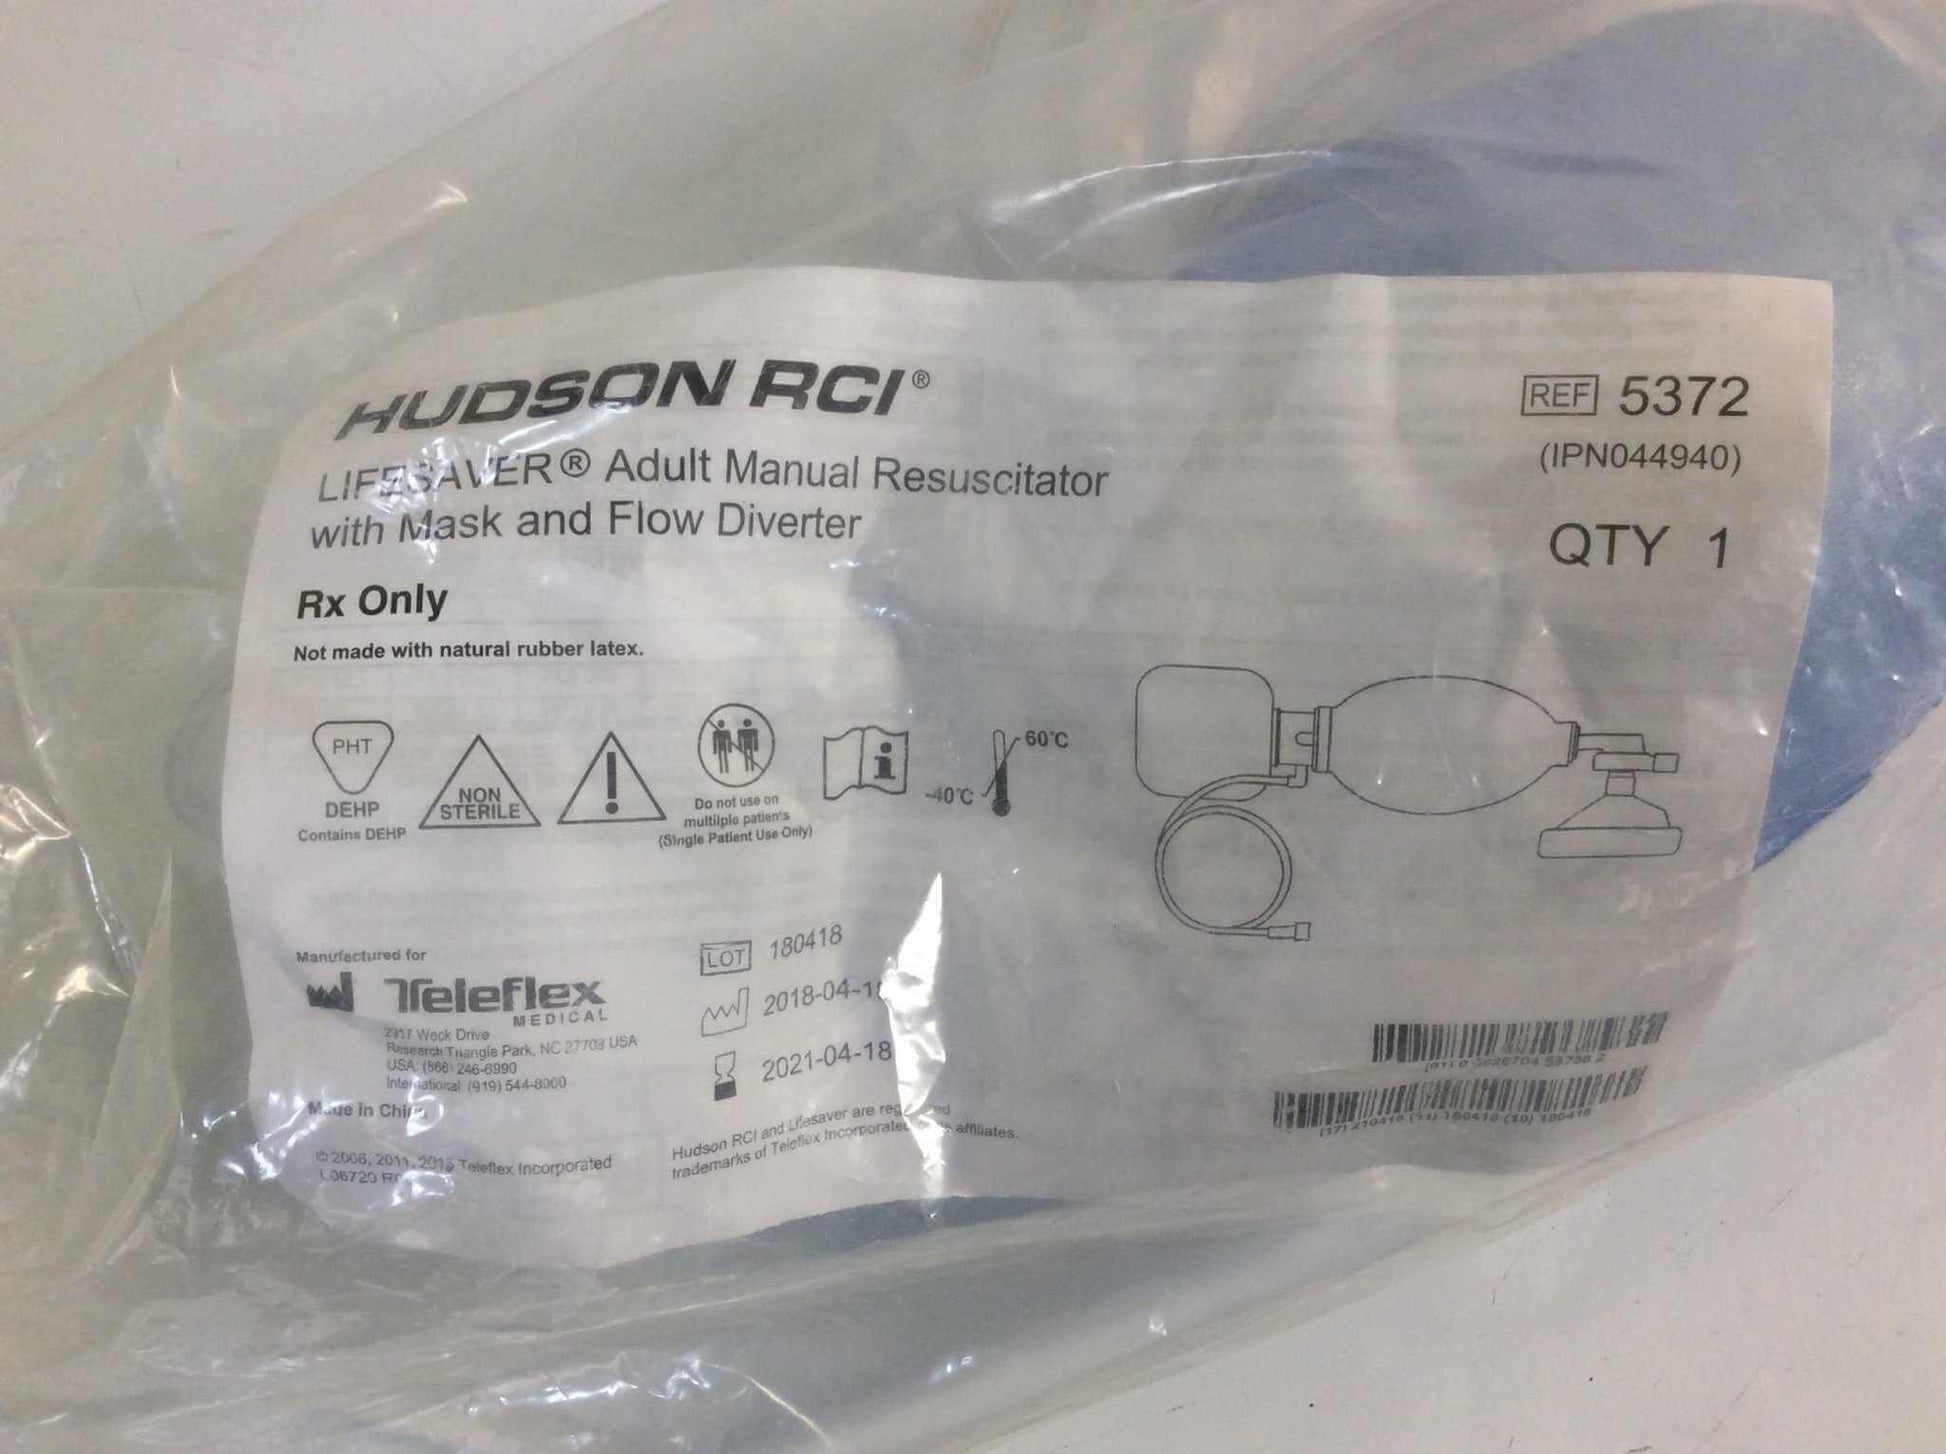 Lot of 5 NEW Hudson RCI LIFESAVER Adult Manual Resuscitator with Mask and Flow Diverter 5372 - MBR Medicals